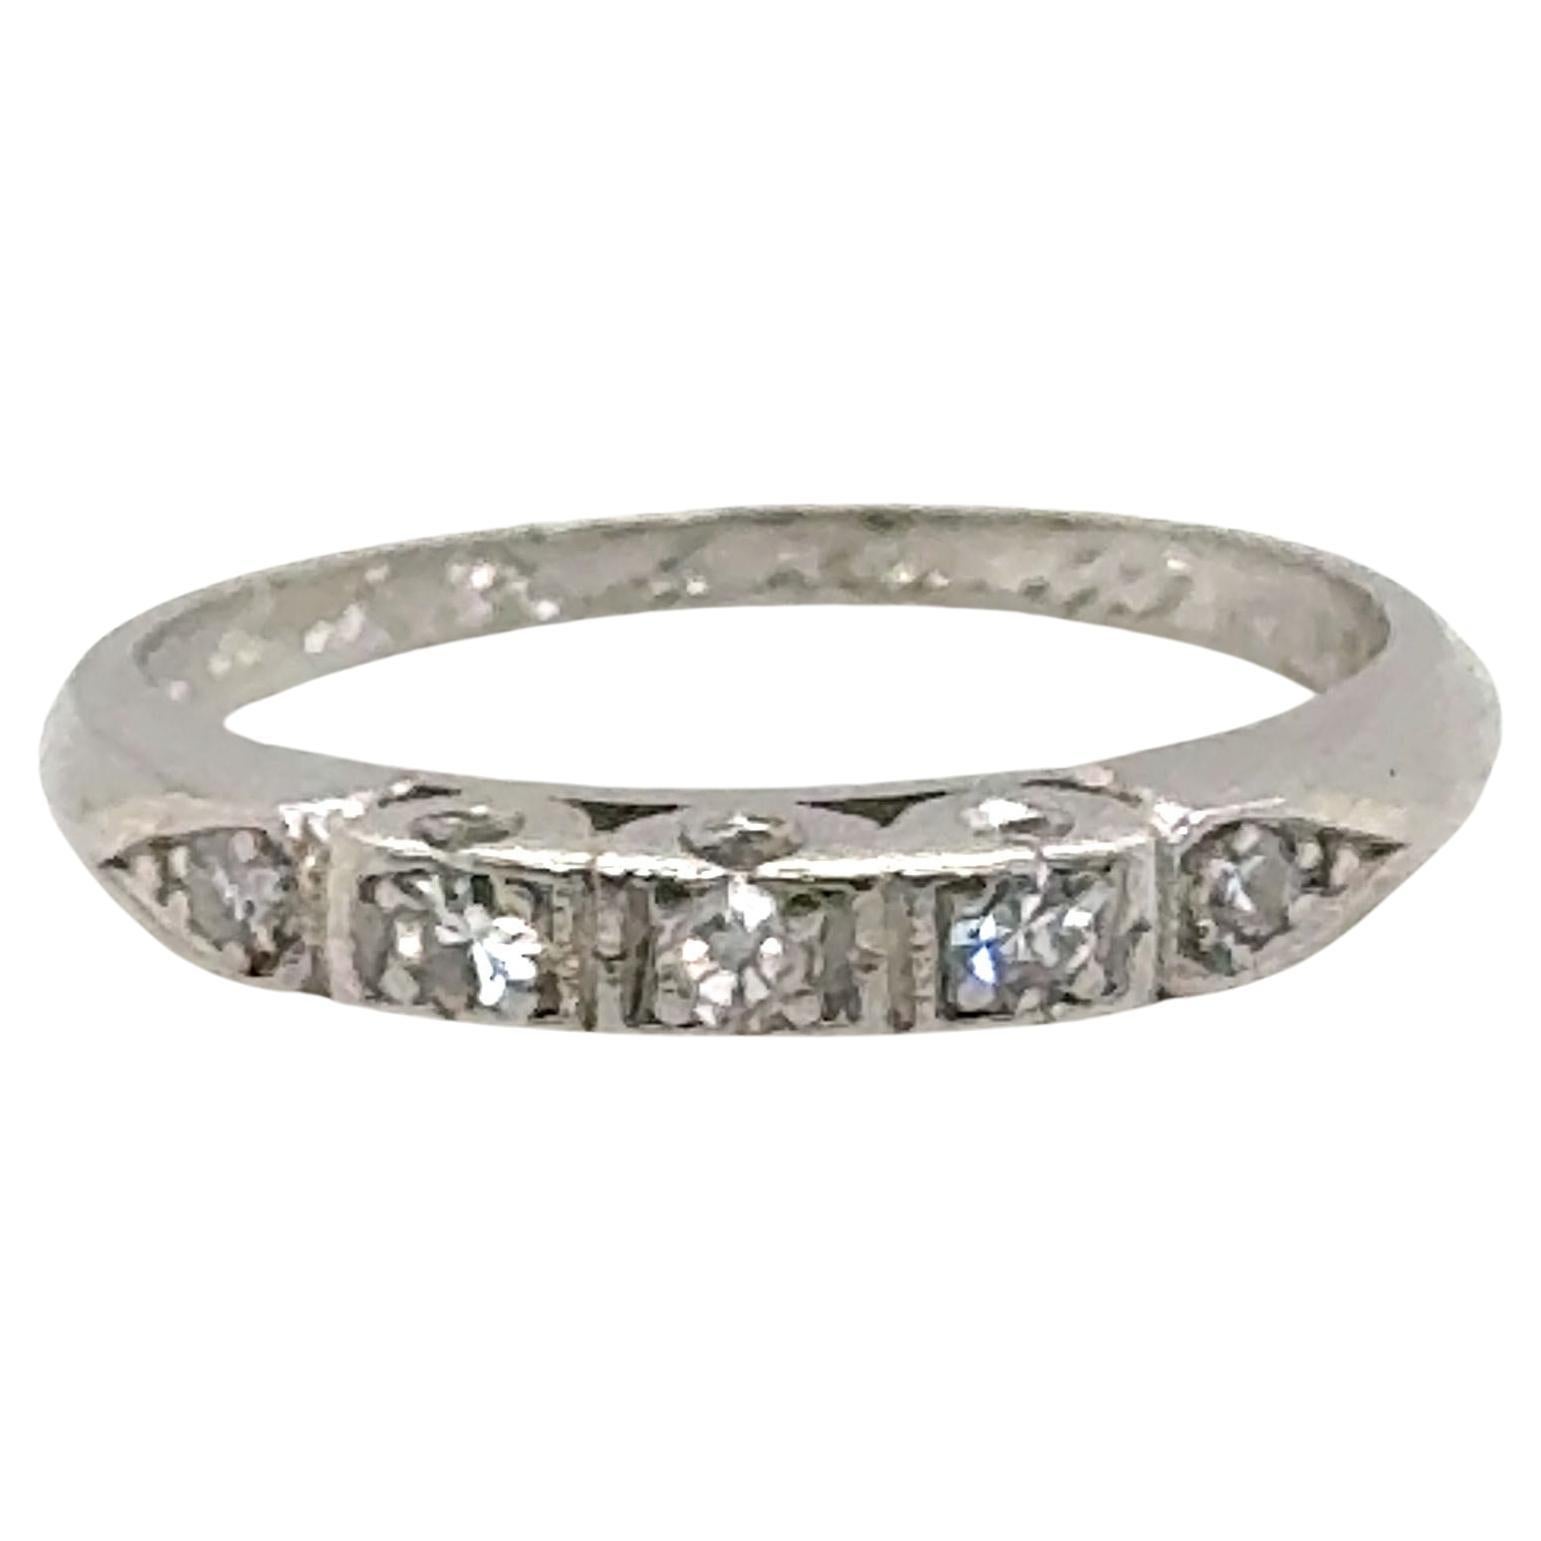  Diamond Wedding Band Genuine Antique Deco Dated 4-24-49 Platinum Ring For Sale